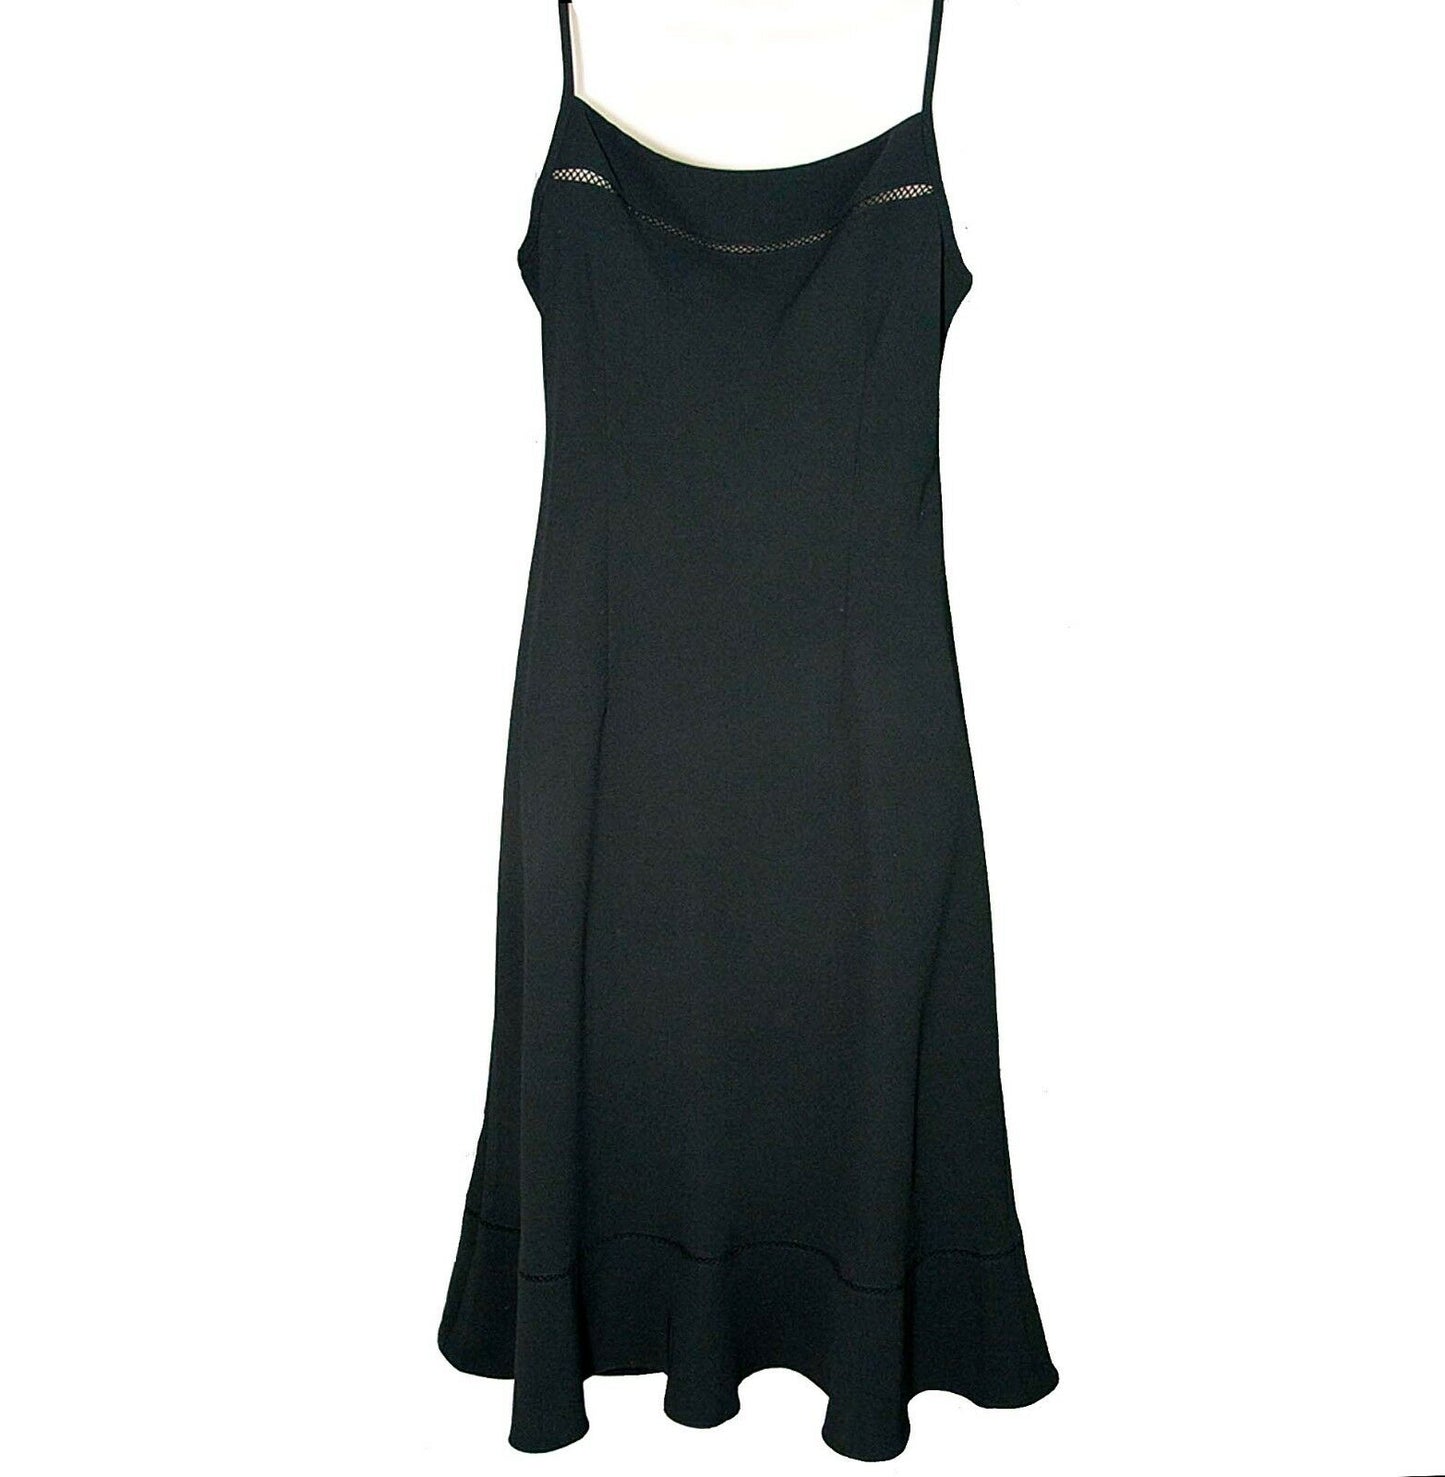 Ann Taylor Loft Lace Inset Flounce Bottom Sleeveless Black Dress Size 6